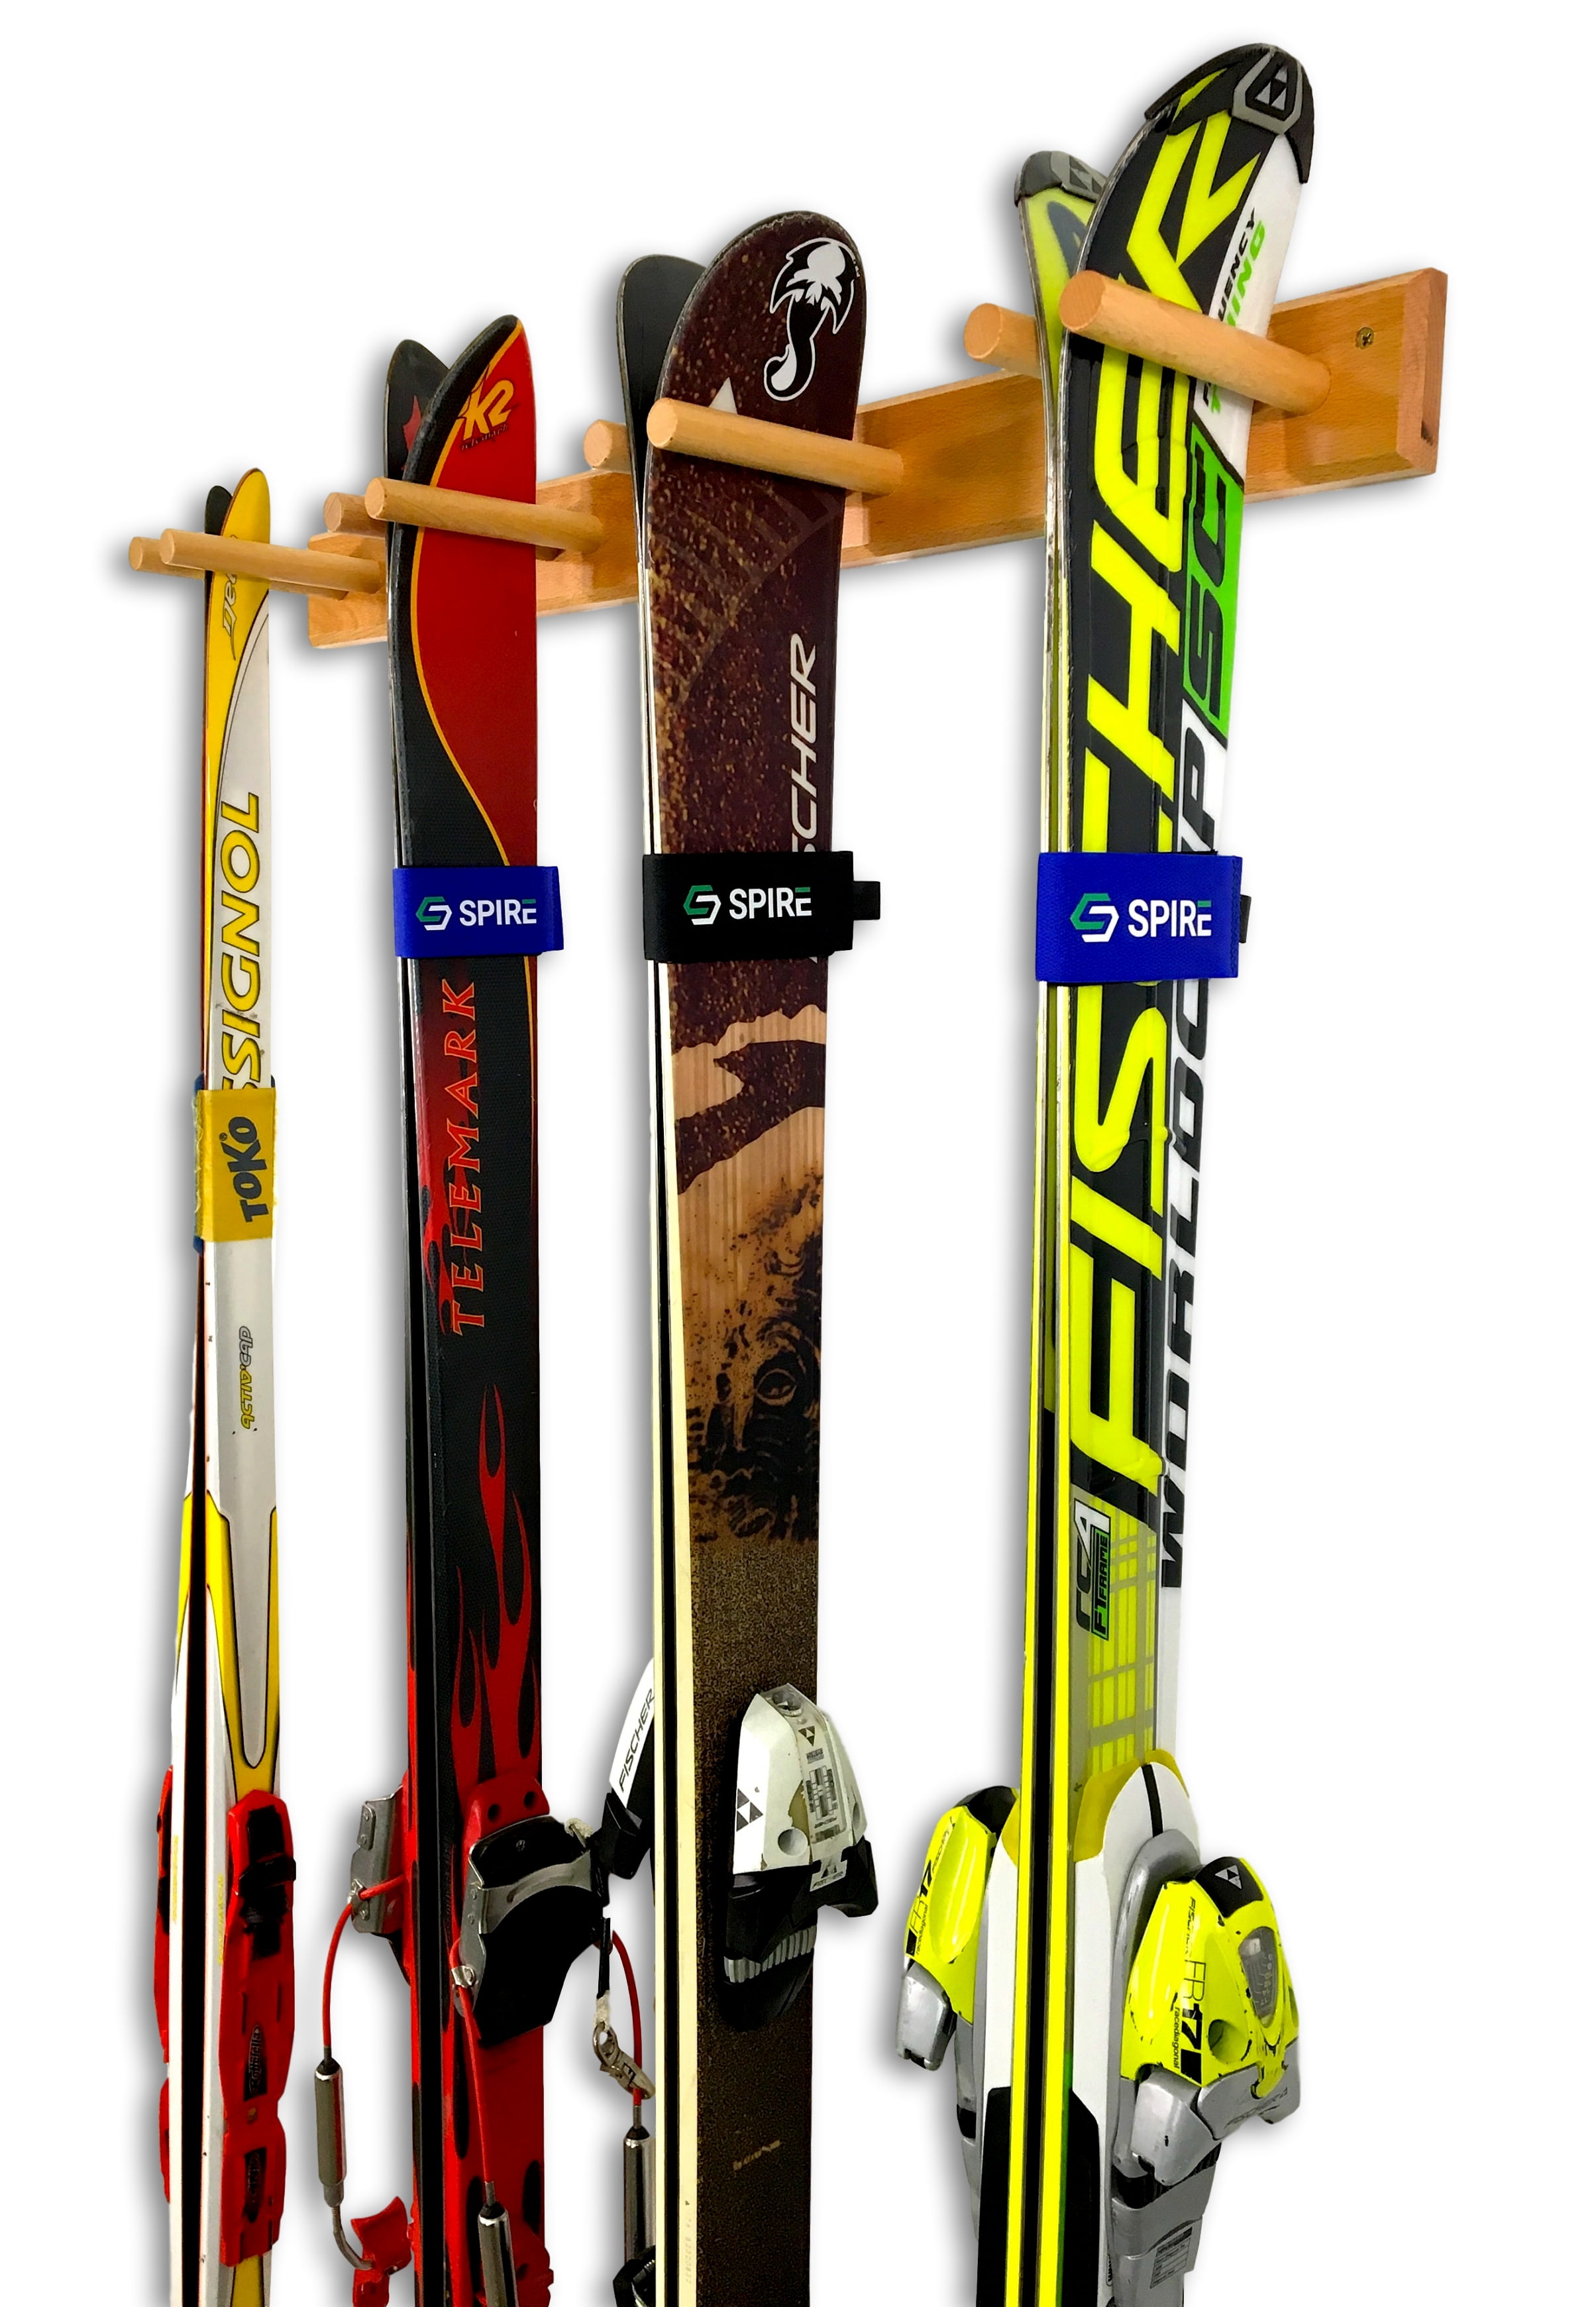 4 Pair Wood Ski Rack and Pole Storage/hanging wall mount rack 